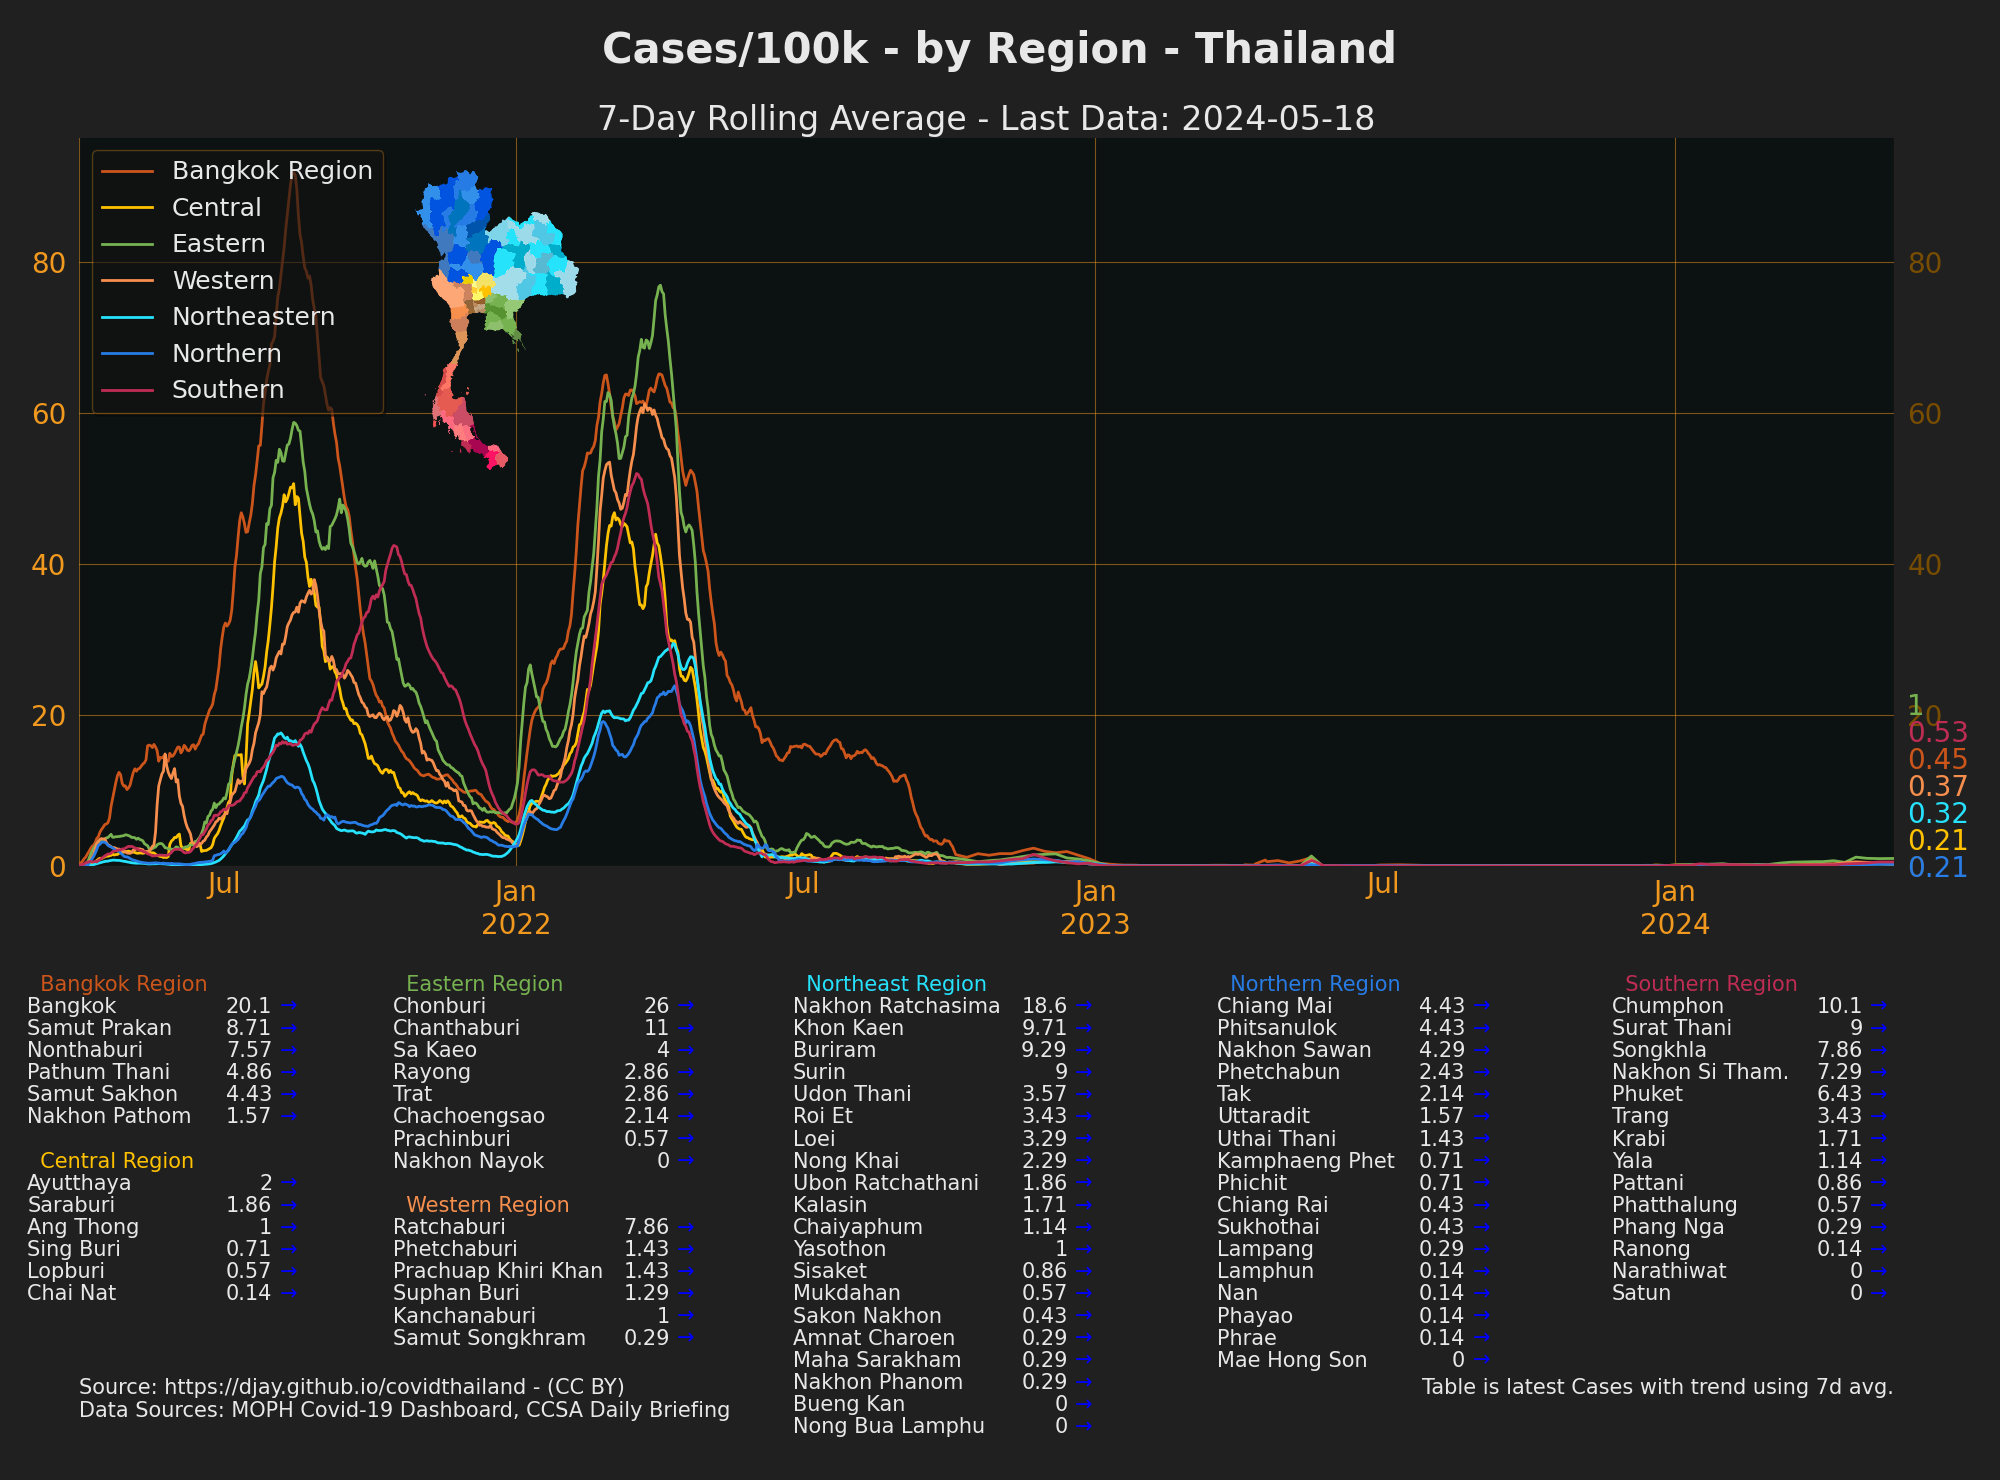 Cases/100k by Region